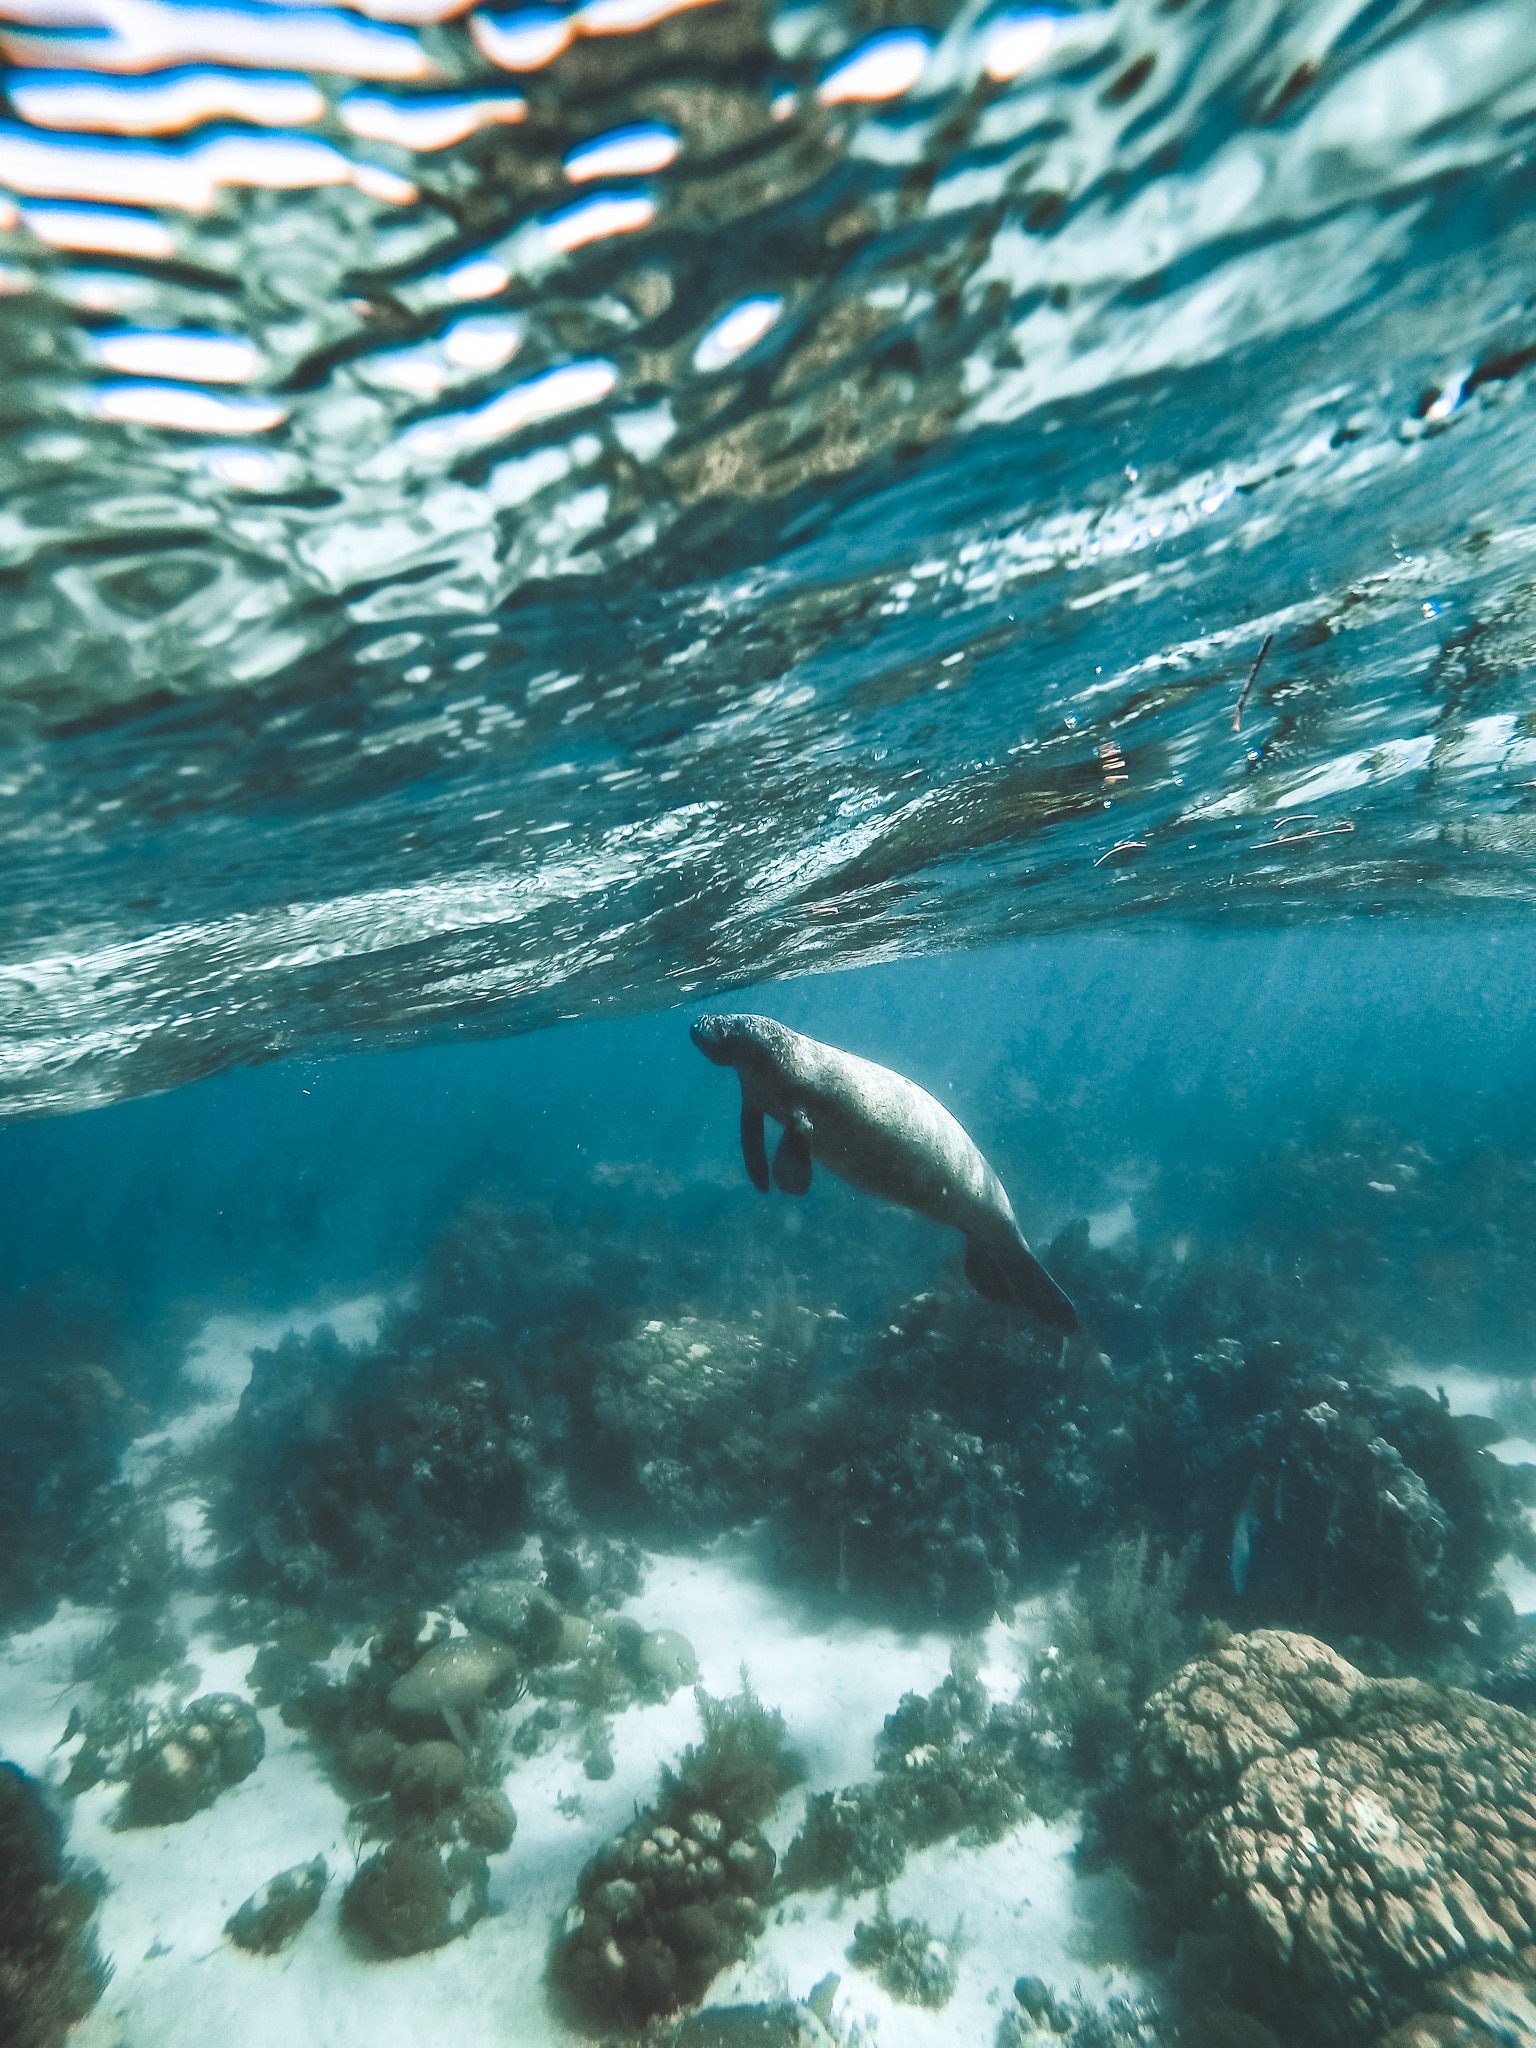 Underwater photo of a manatee